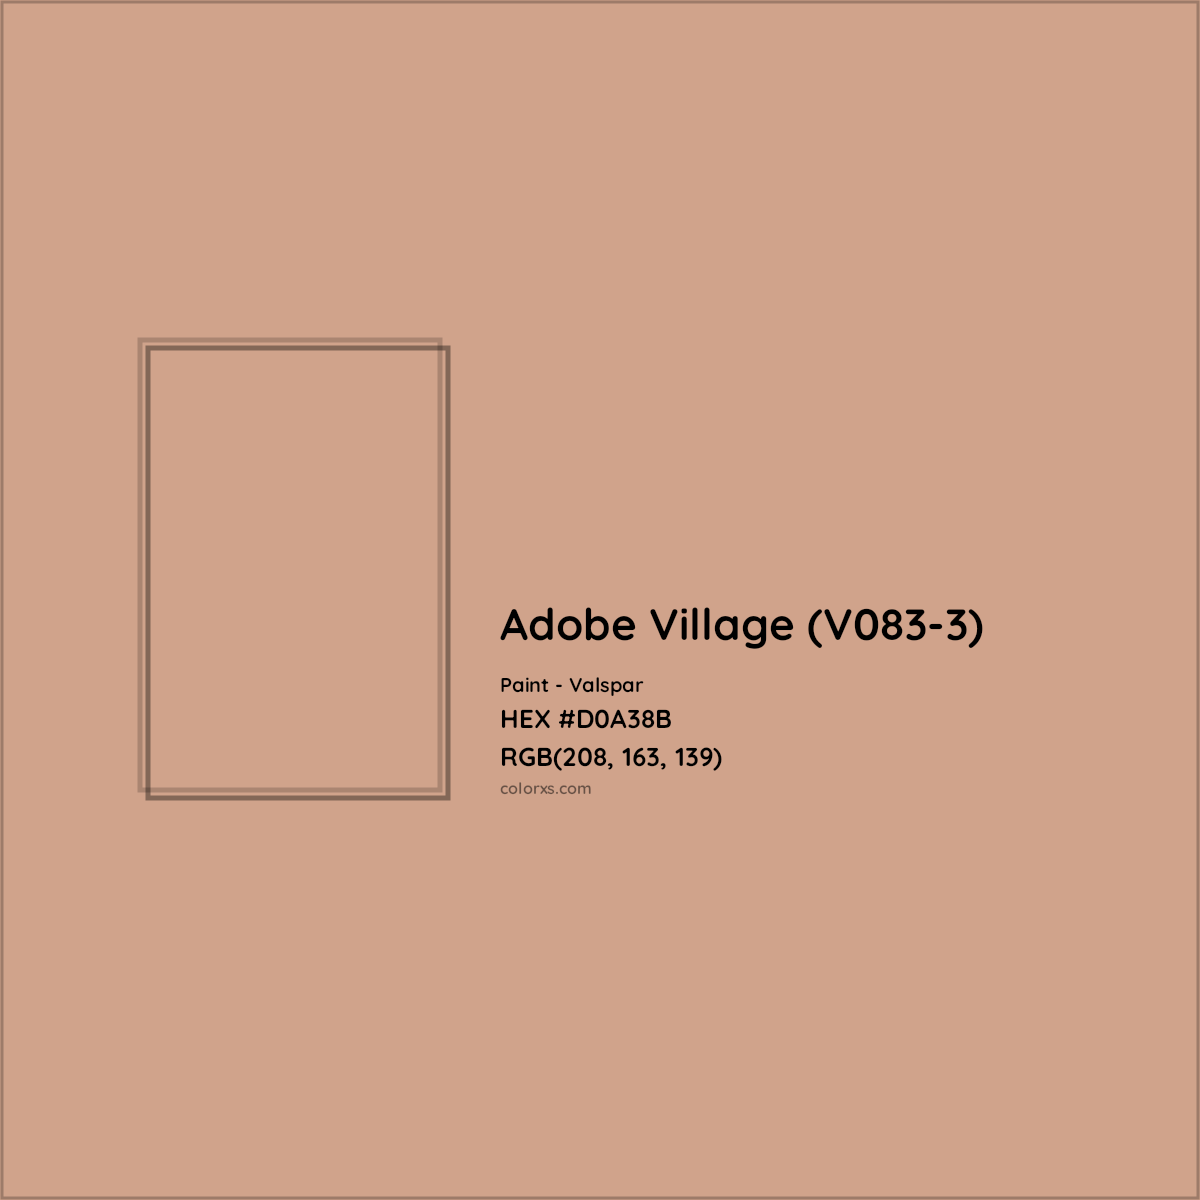 HEX #D0A38B Adobe Village (V083-3) Paint Valspar - Color Code